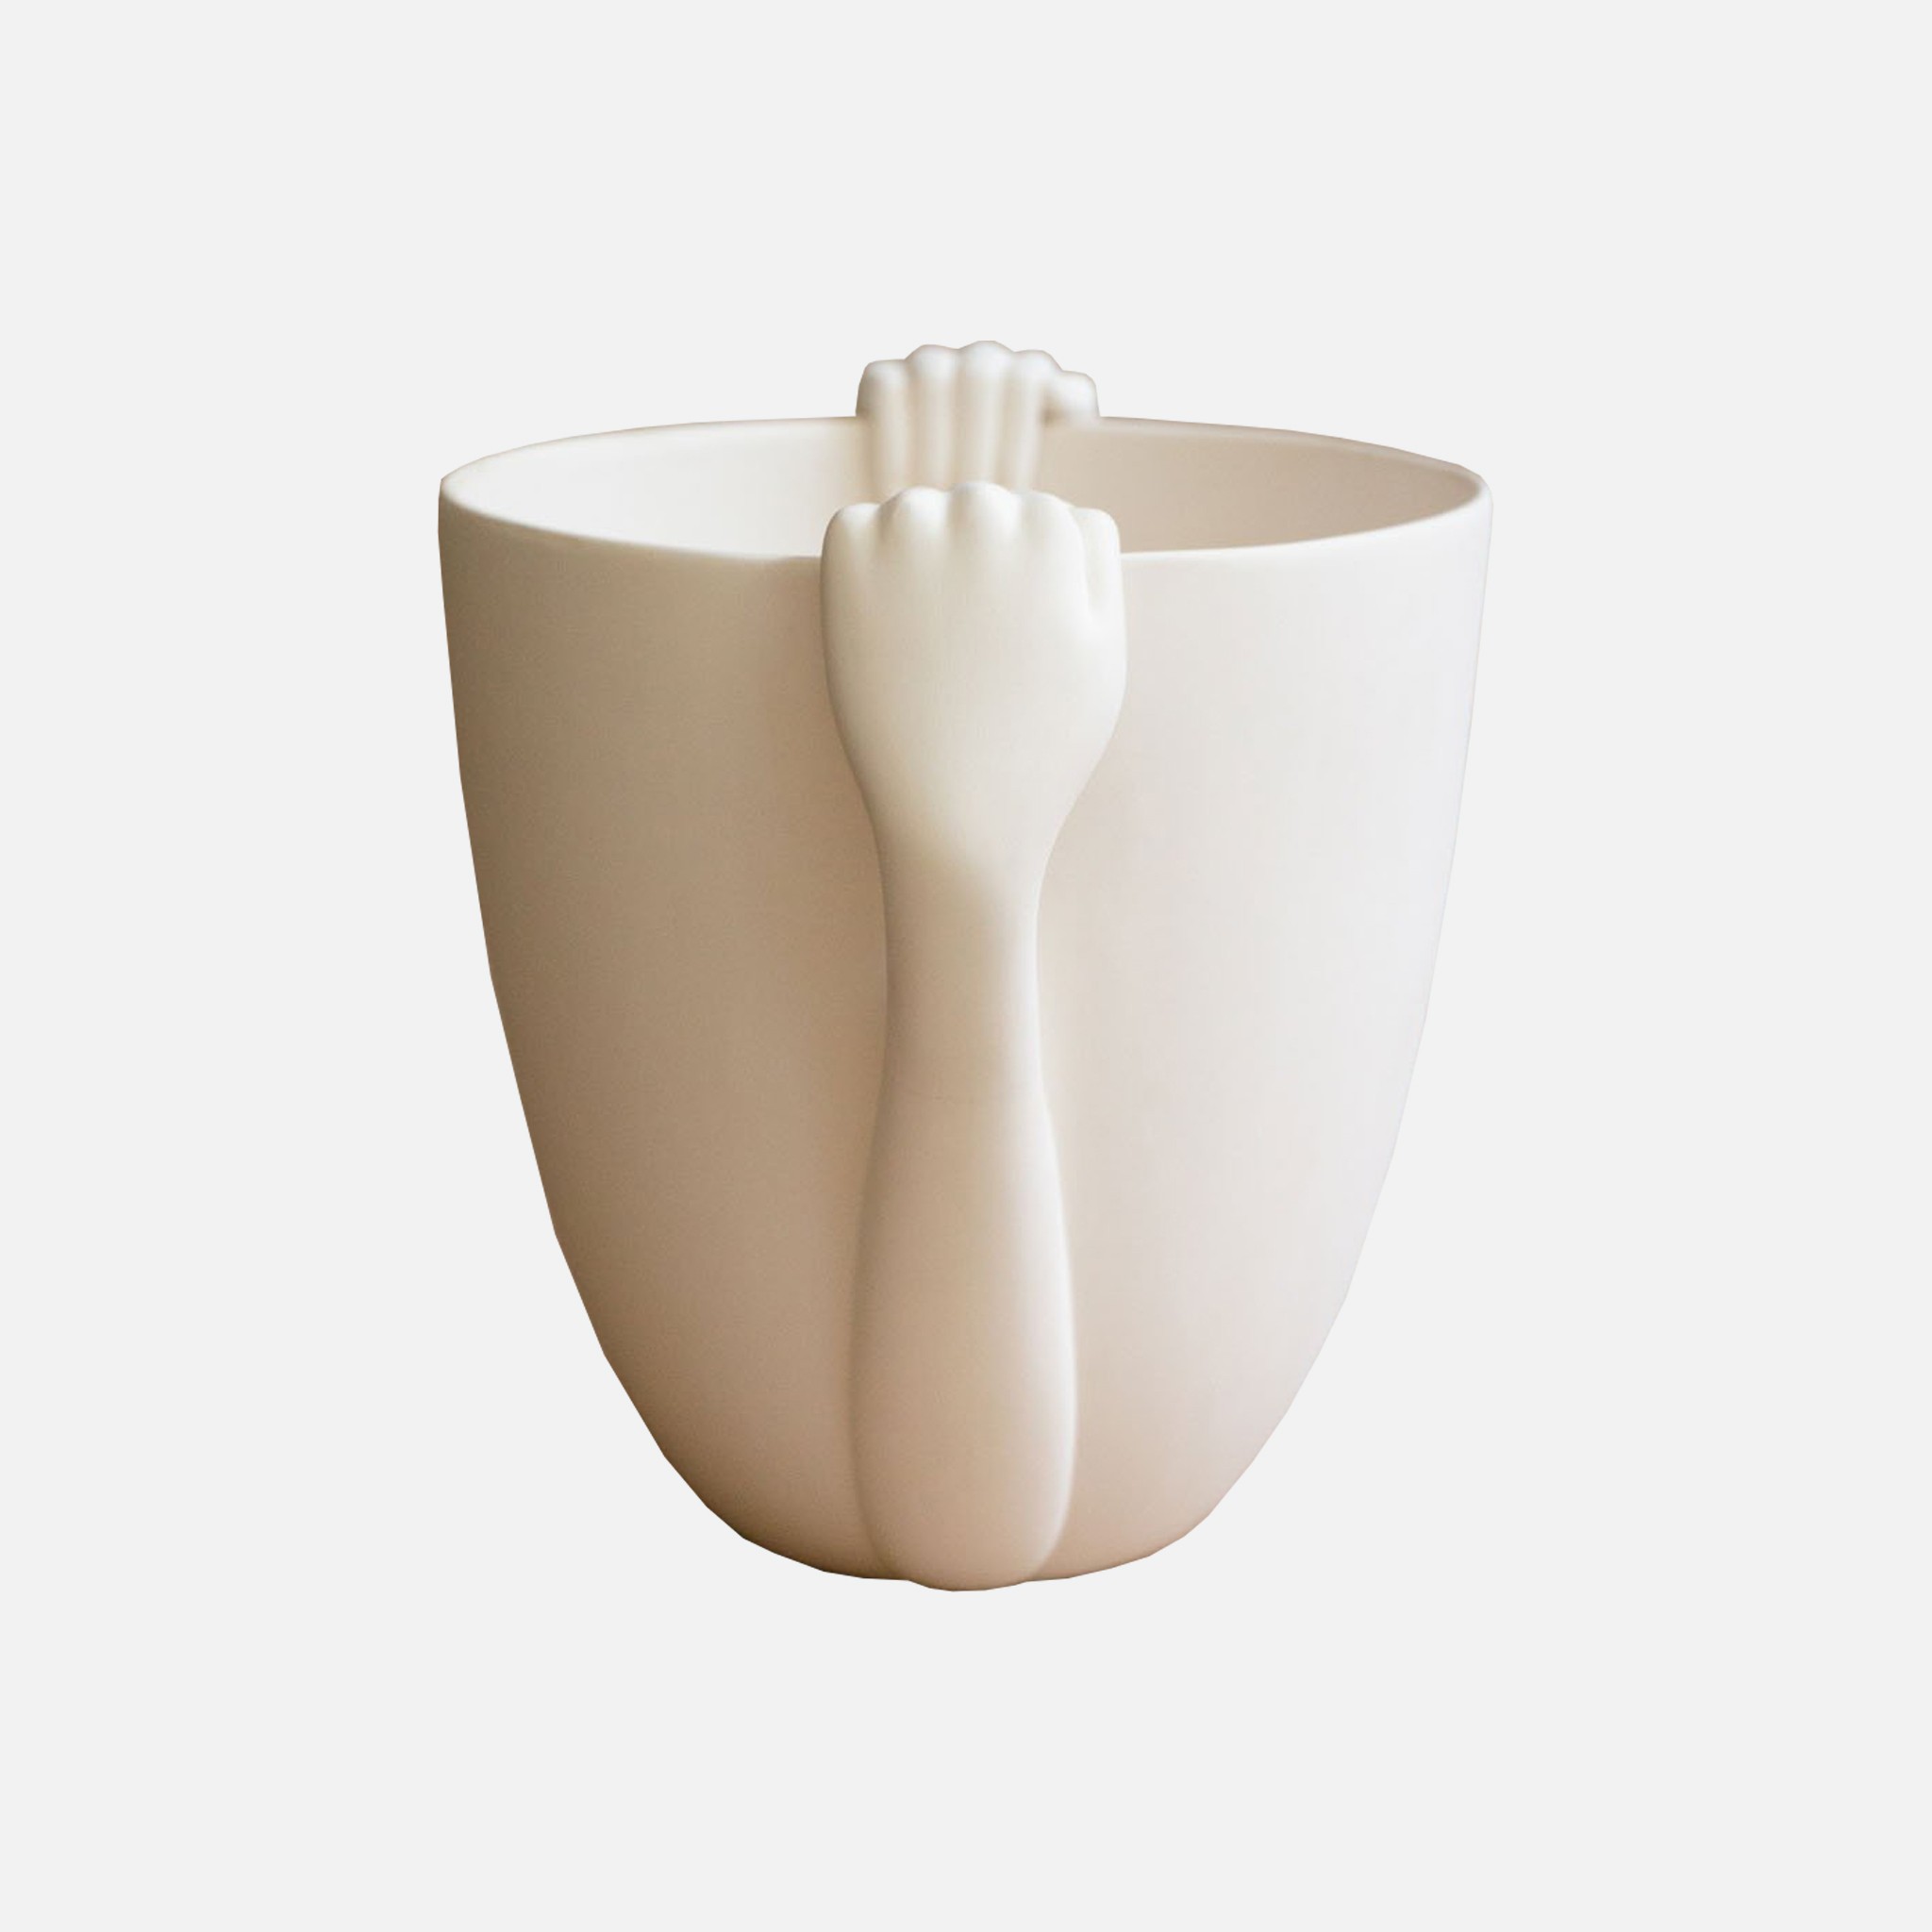 The image of an Carmen Ellis' Studio Hand Vessel product